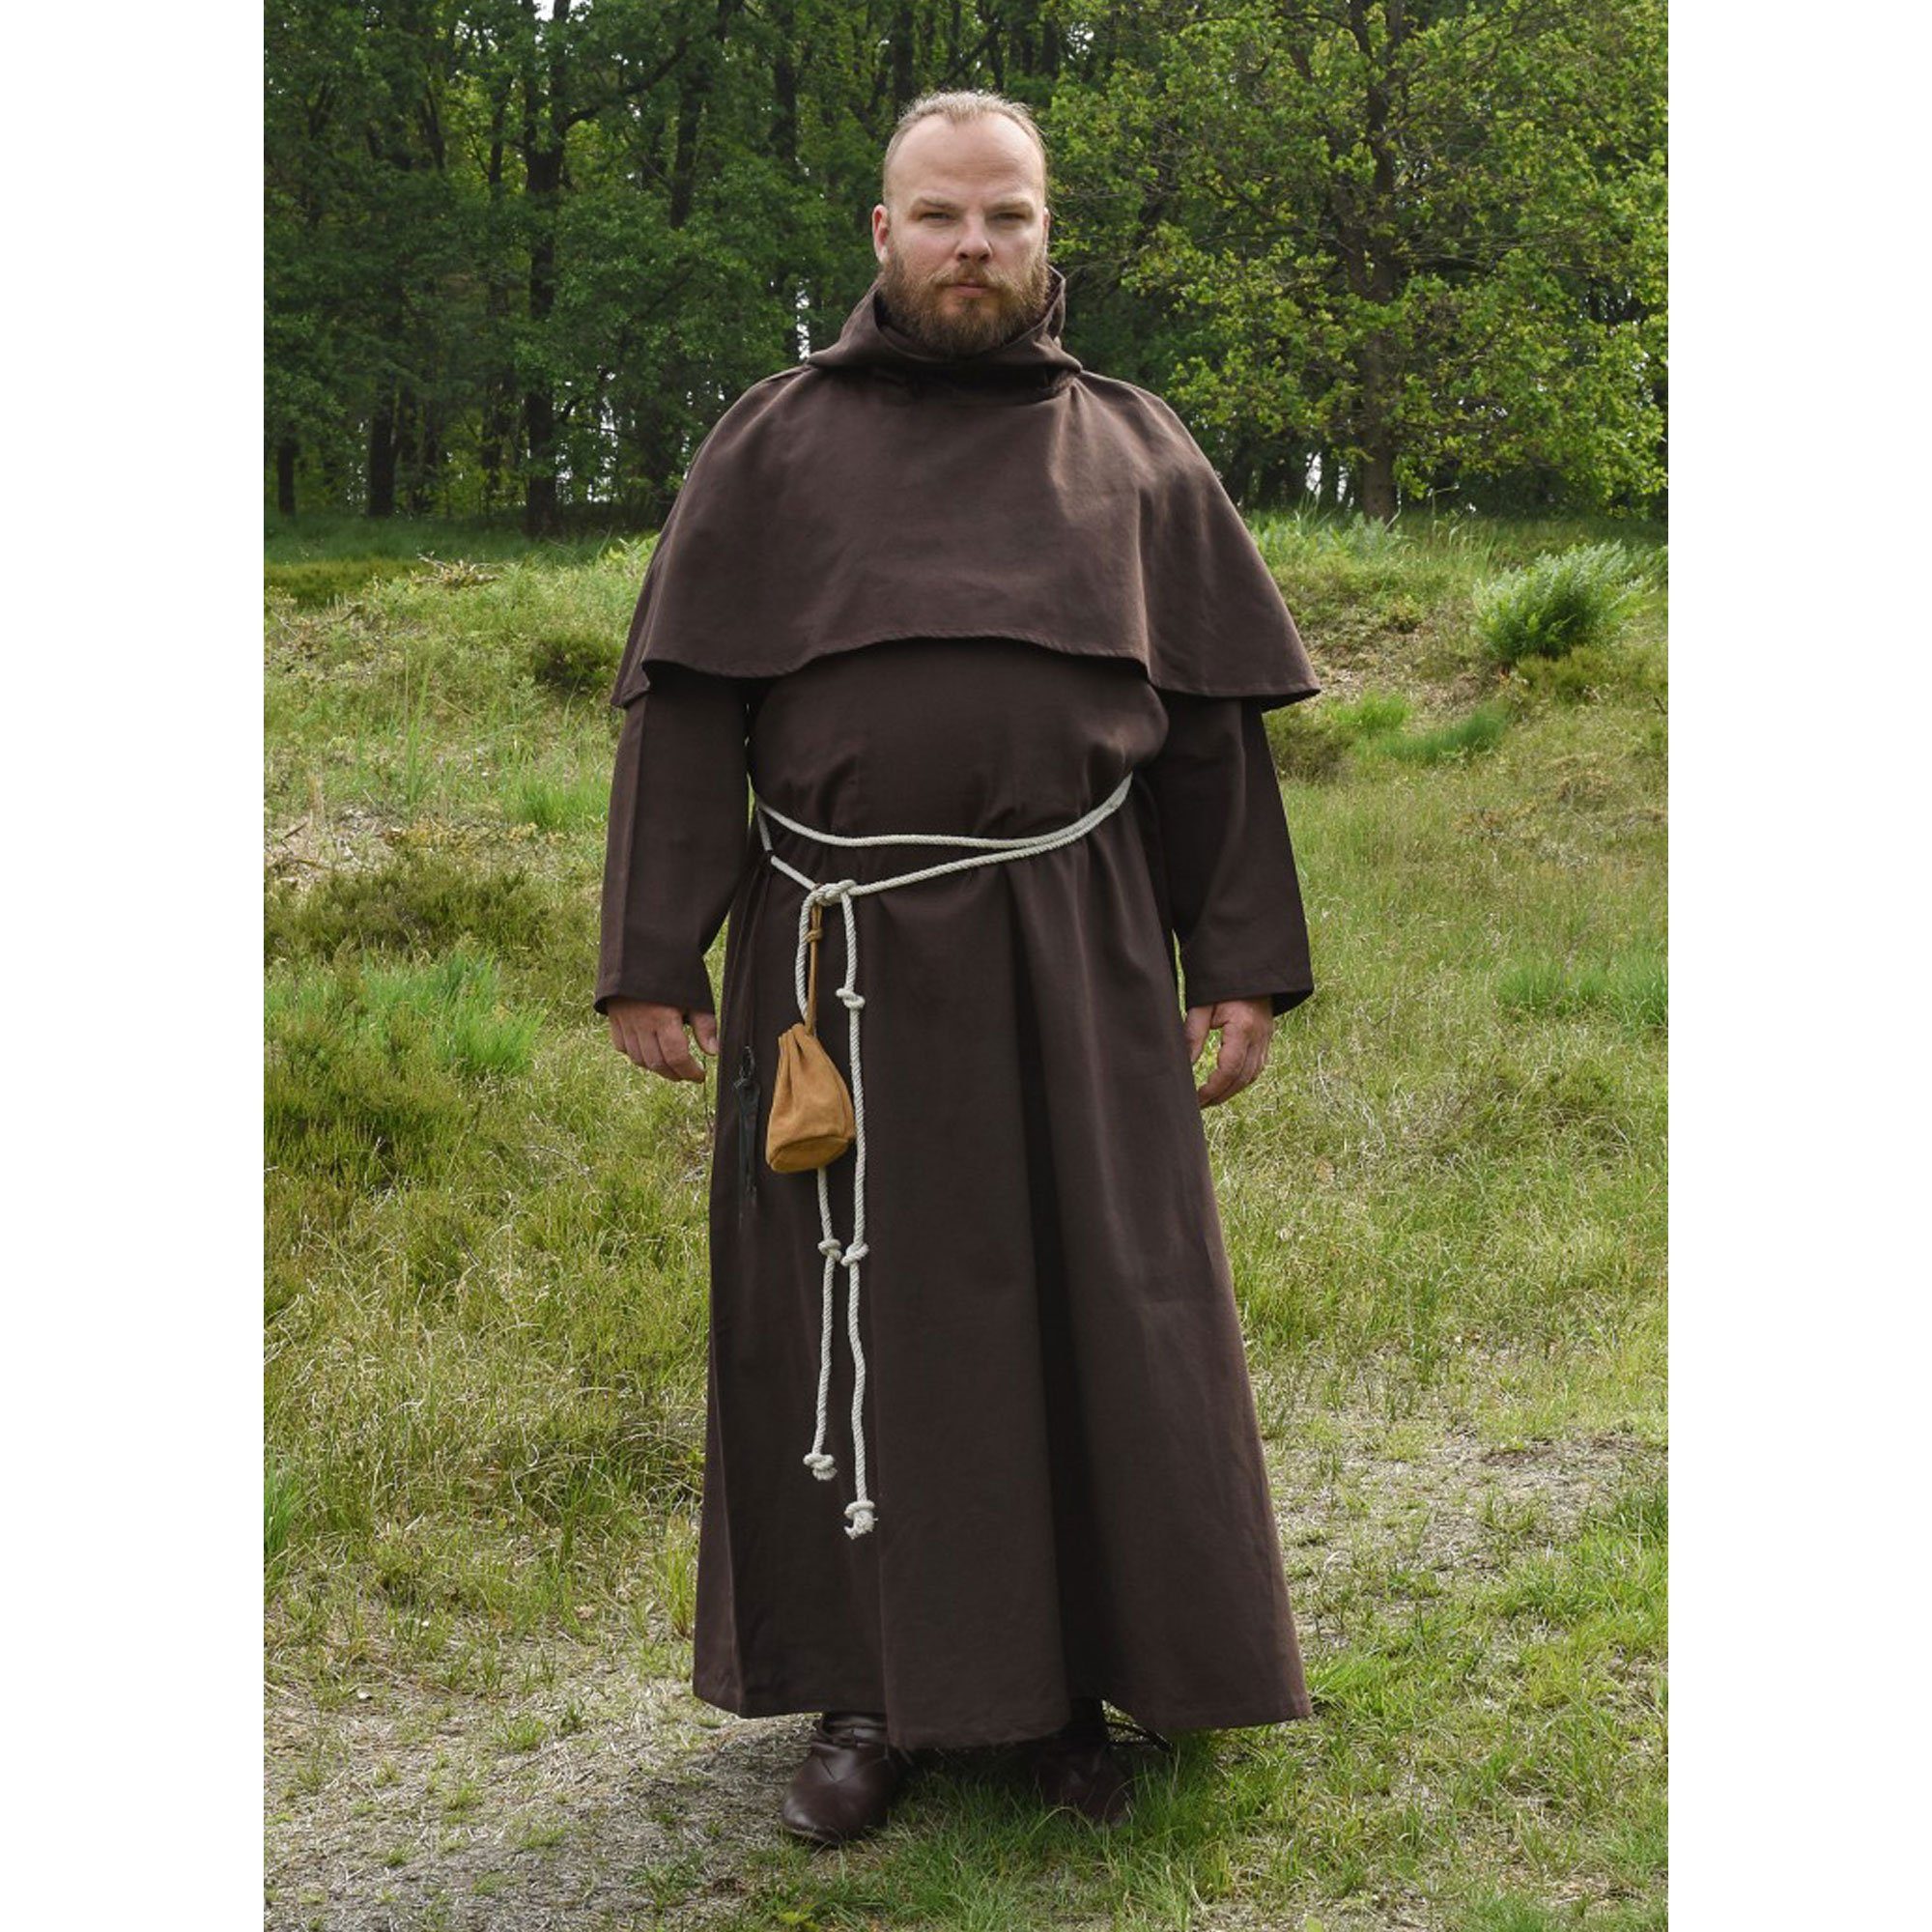 Battle Merchant Wikinger-Kostüm Mönchskutte Benedikt aus Baumwolle, braun